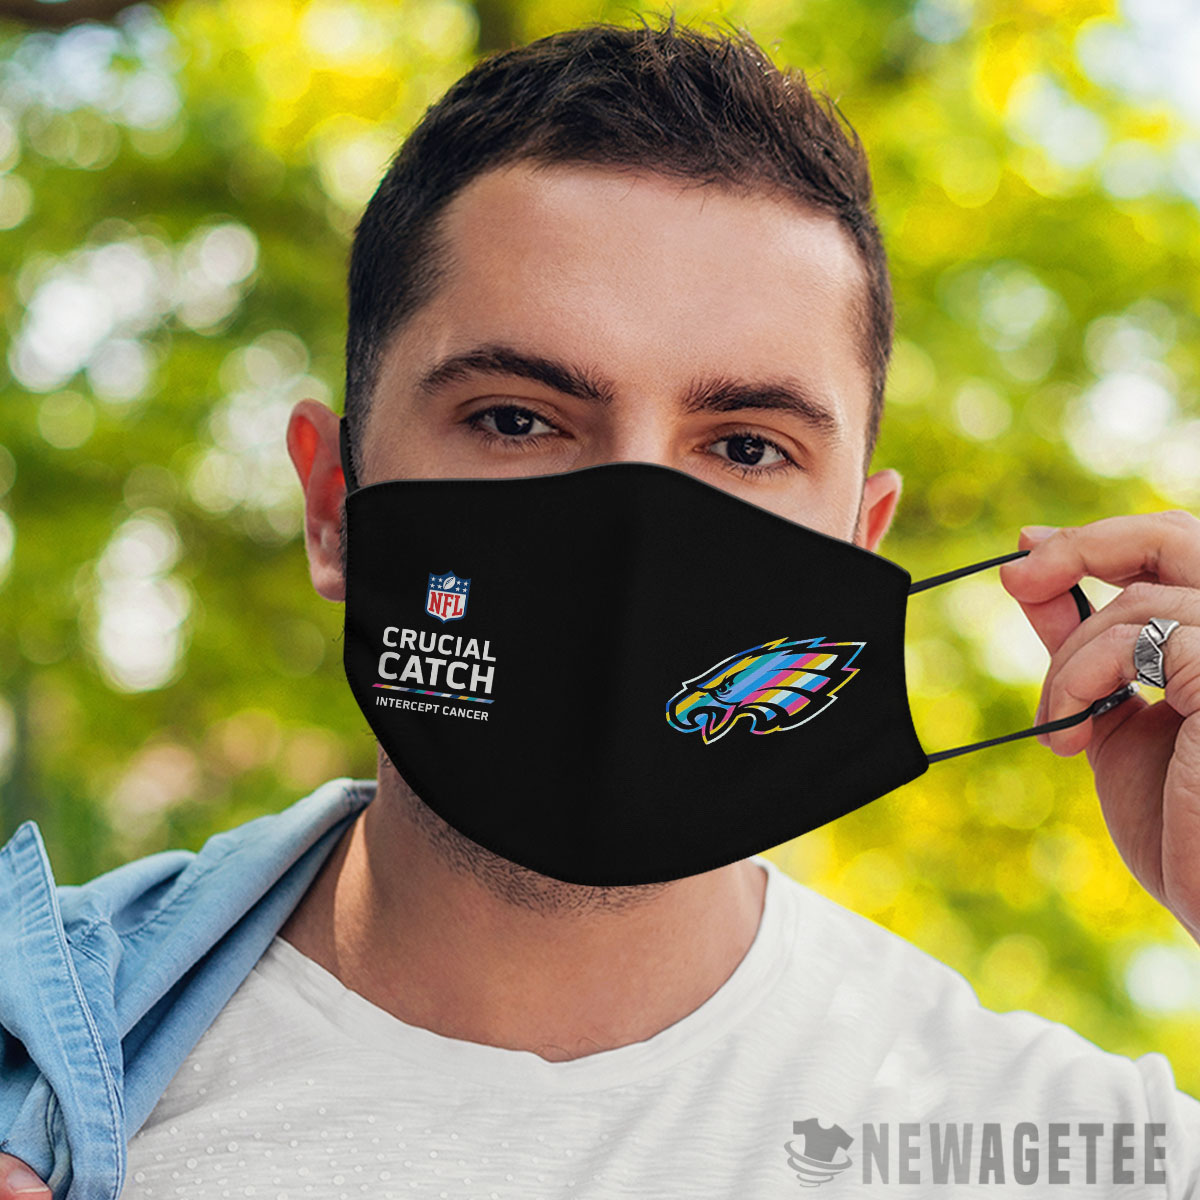 Philadelphia Eagles Nfl Crucial Catch Multicolor Face Mask Cloth Reusable